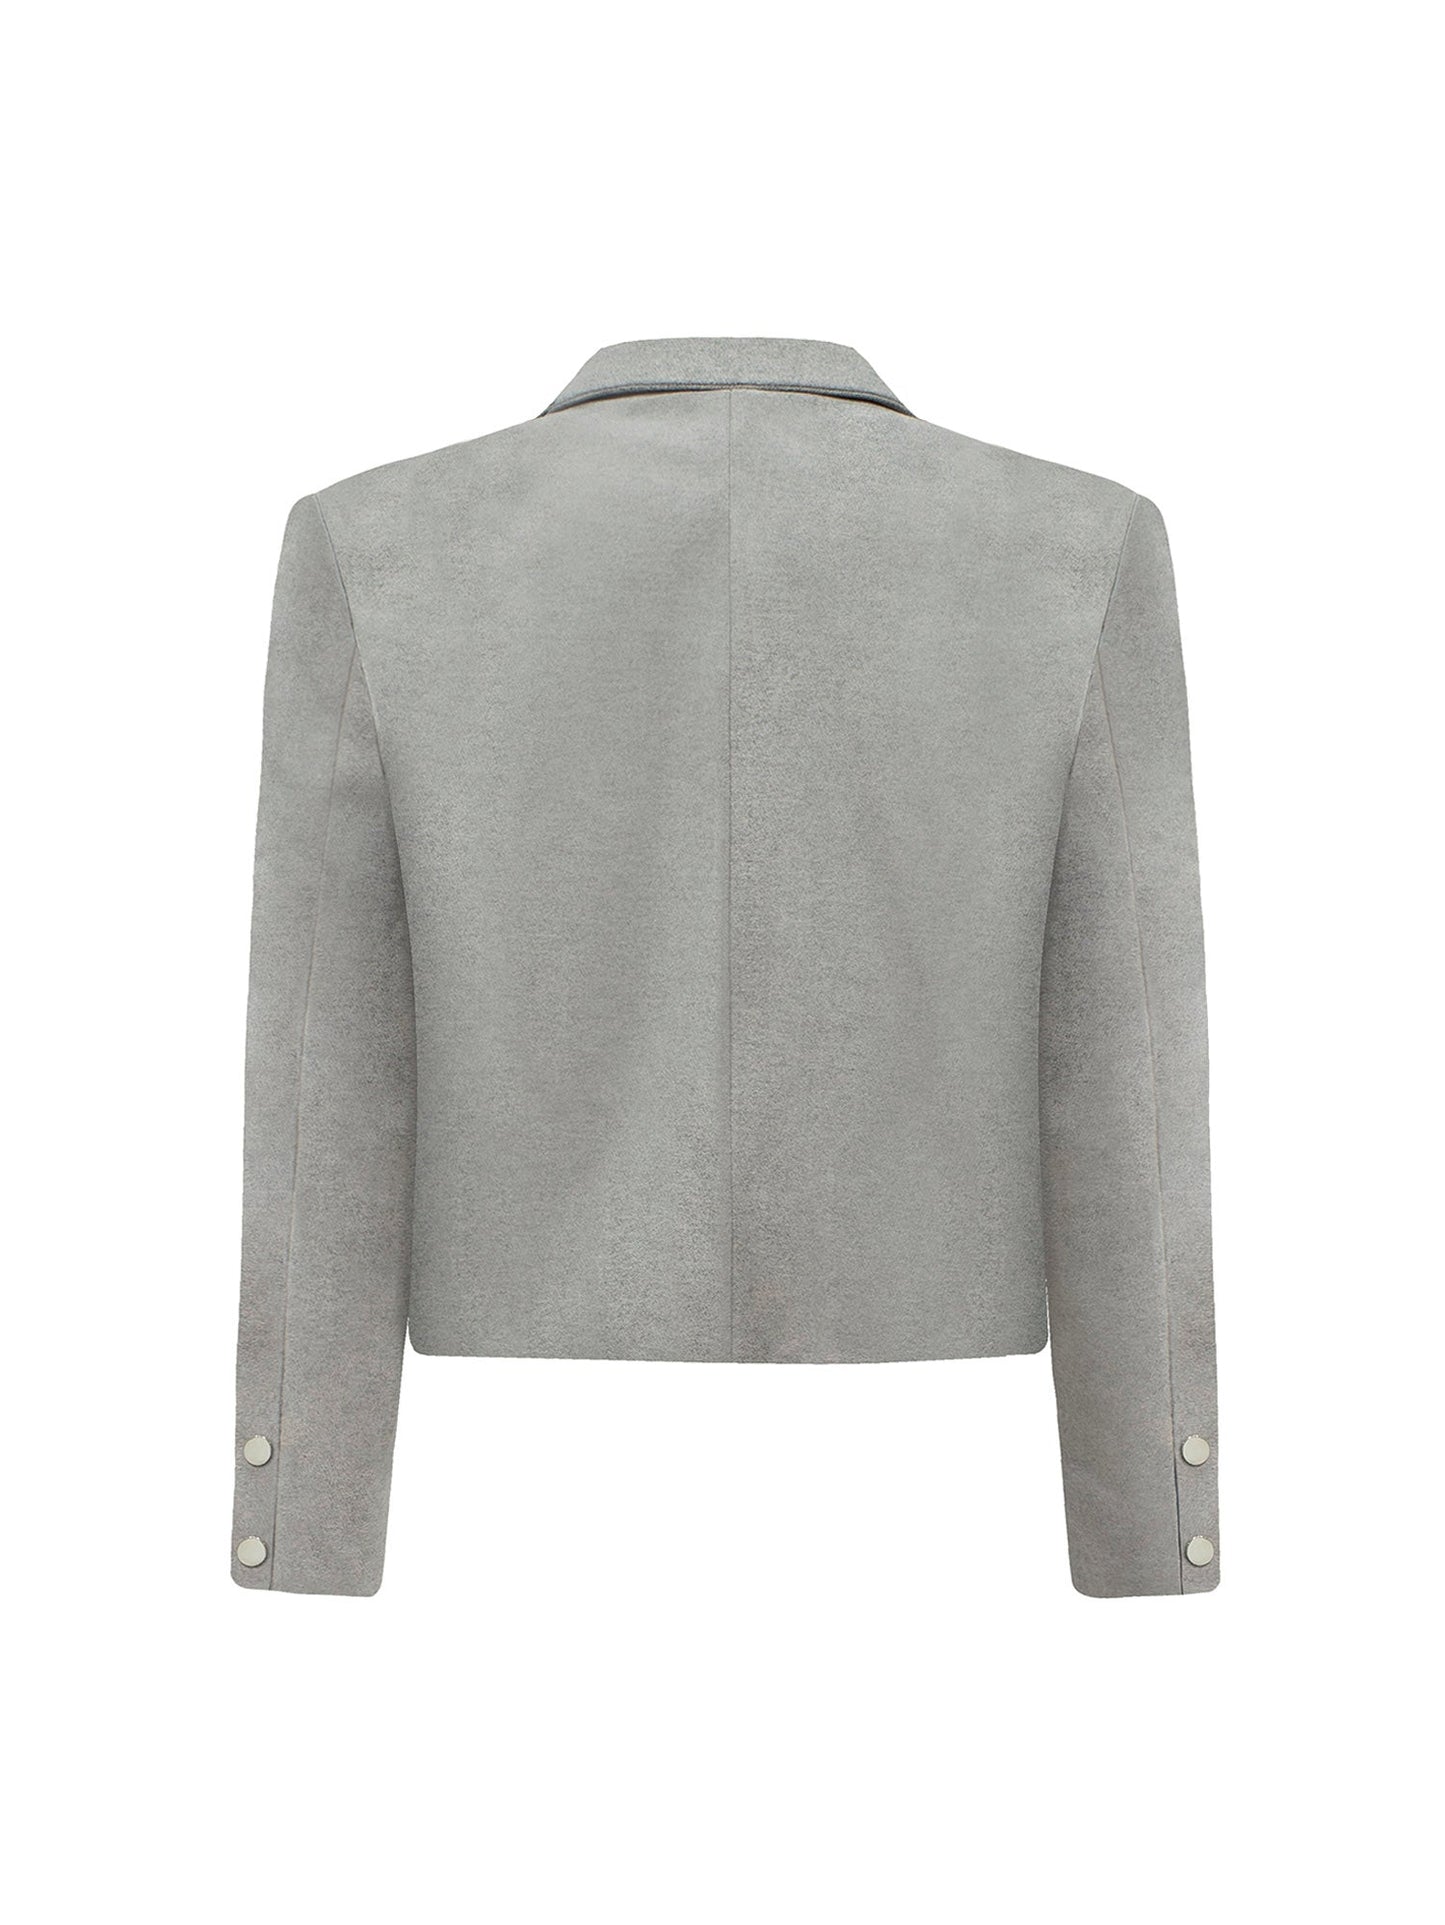 London Jacket Grey